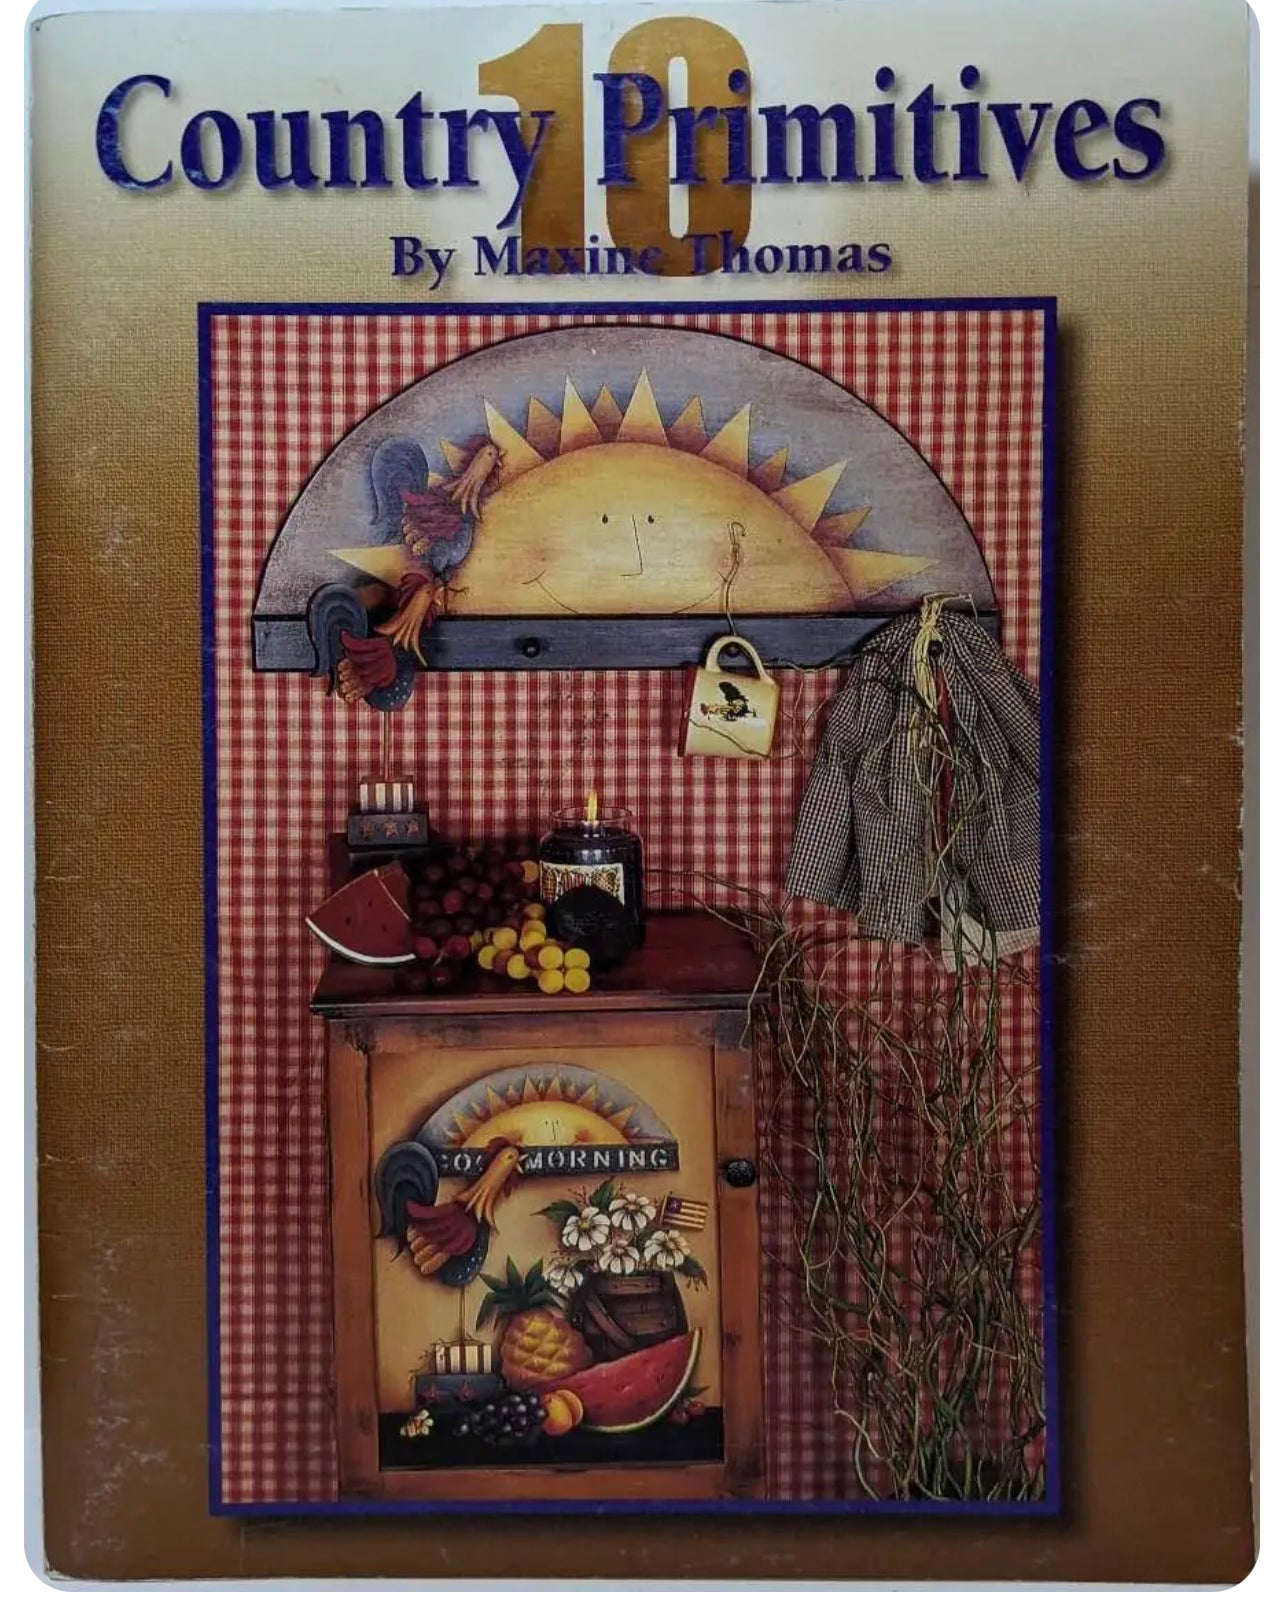 Libro Country primitives vol 10 Maxine Thomas ( Buone condizioni) Out of the Wood